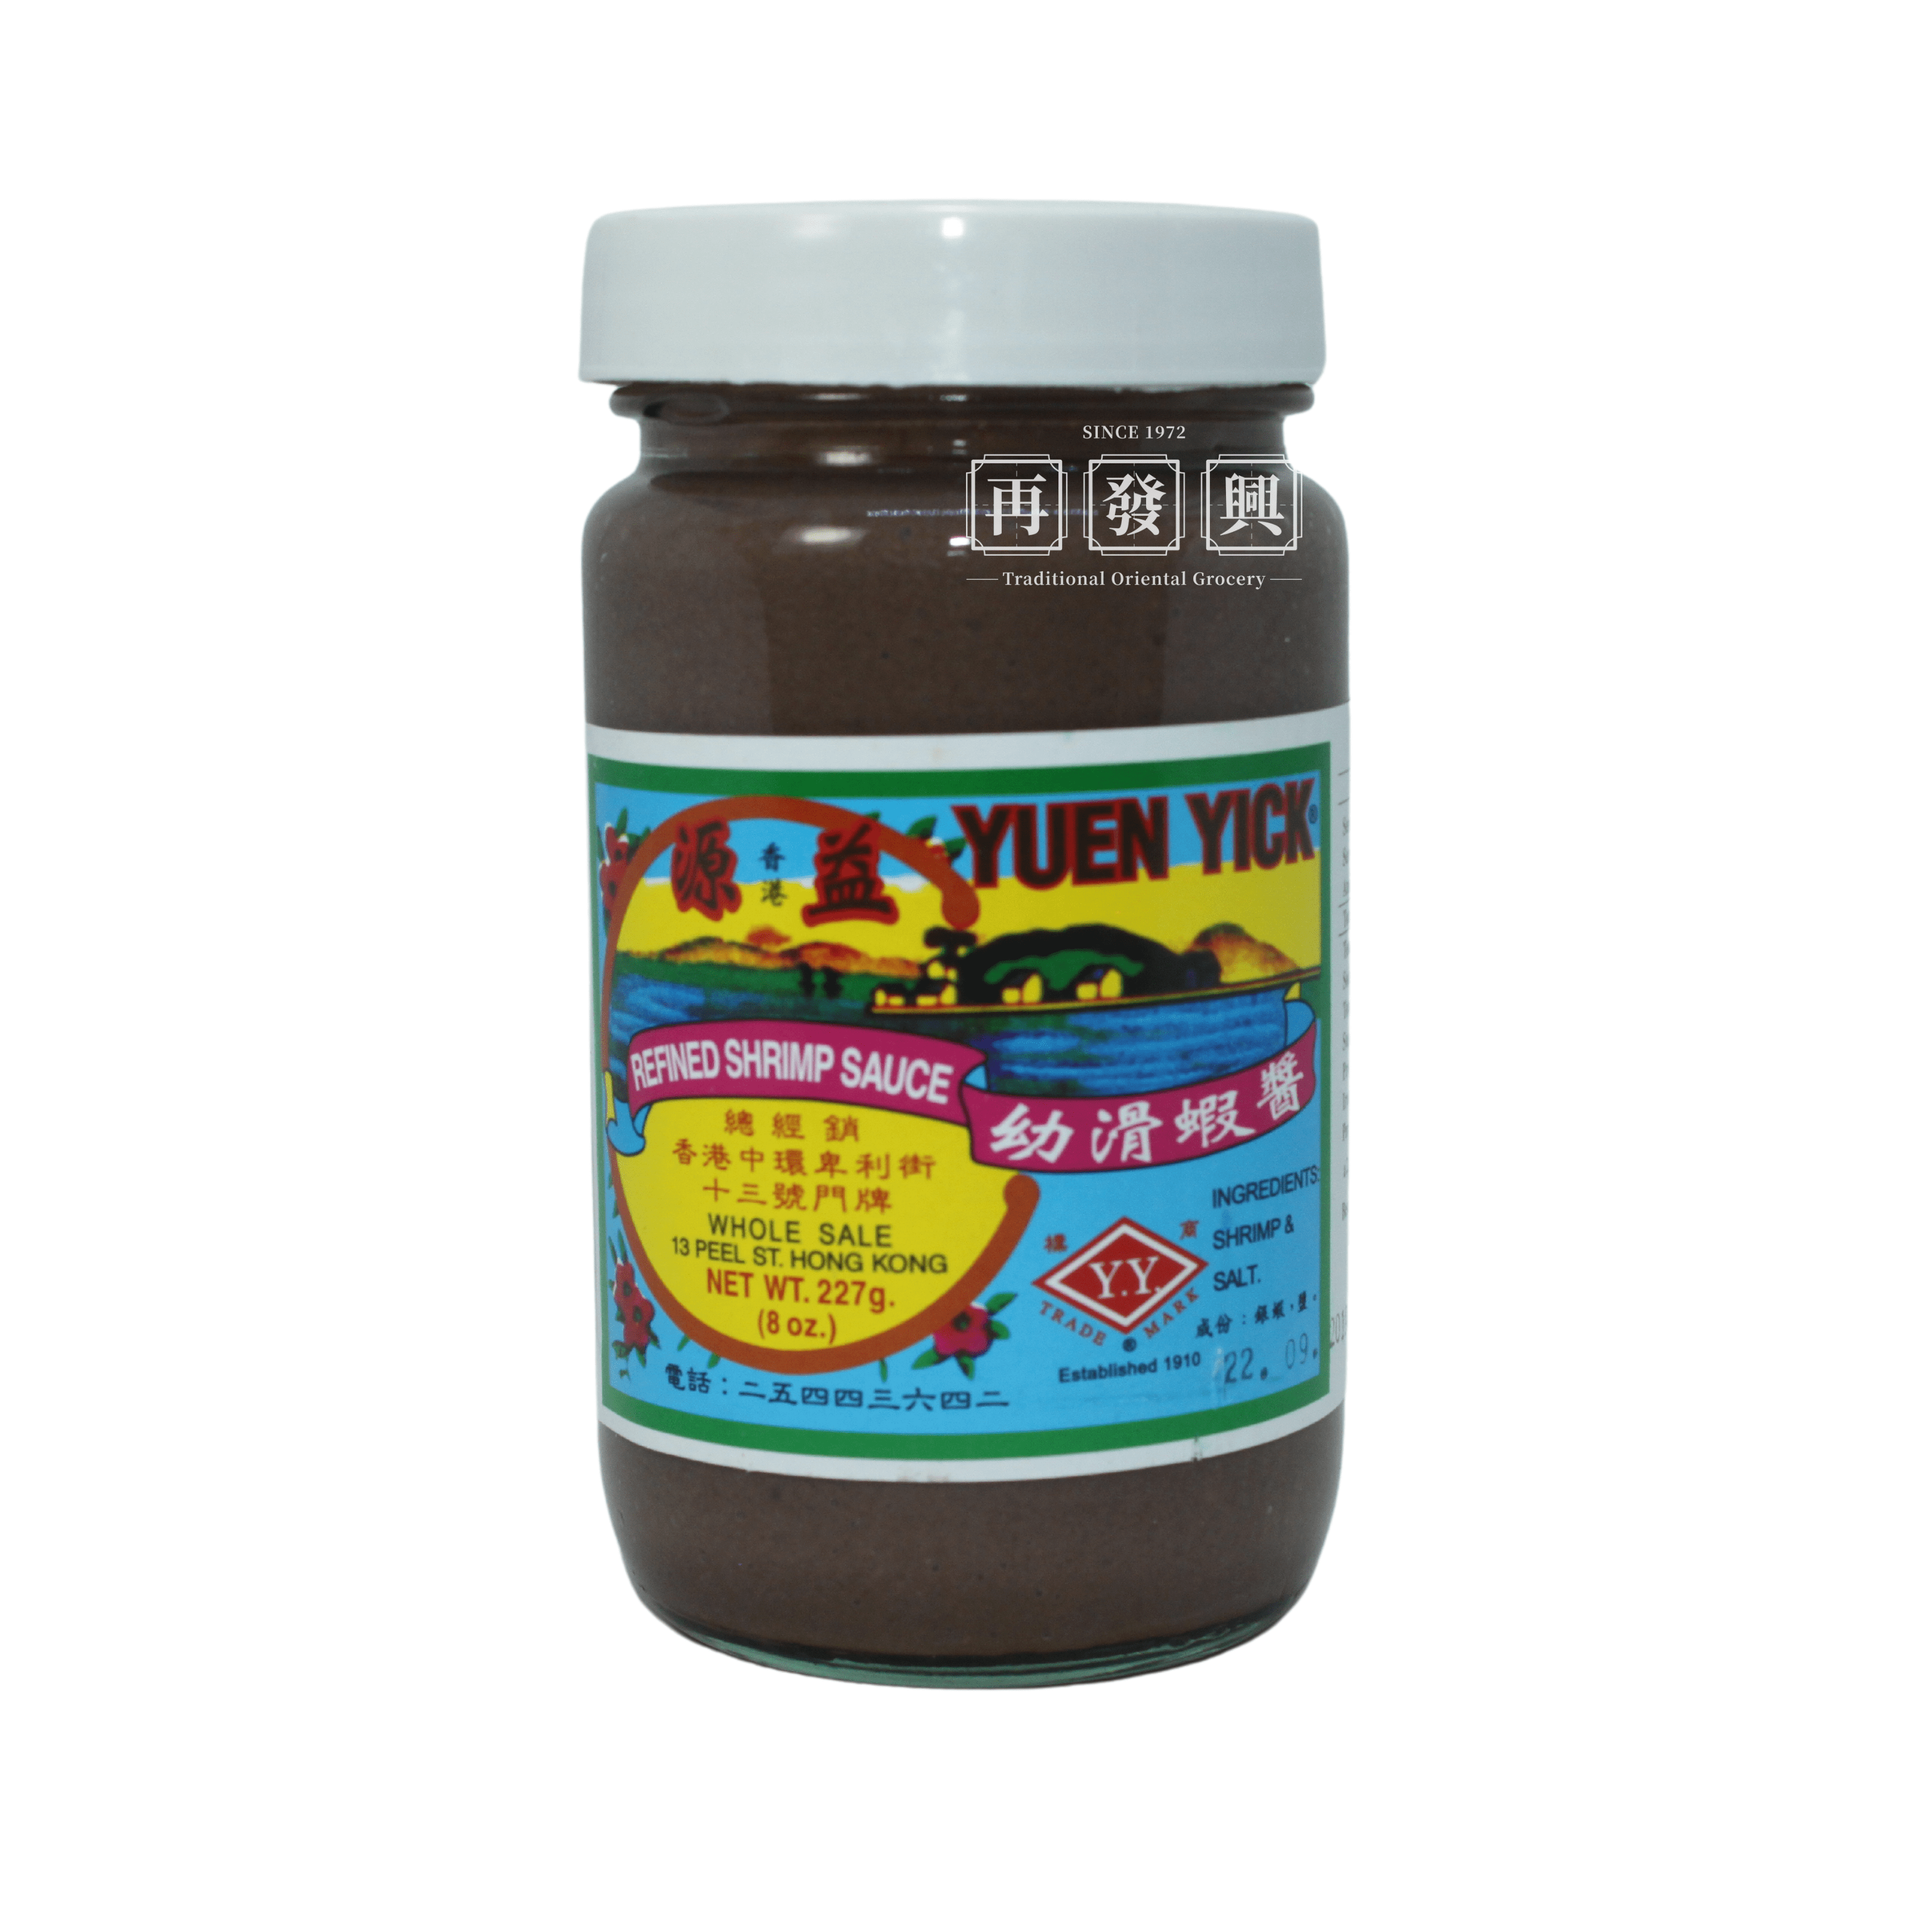 Yuen Yick Refined Shrimp Sauce 227g